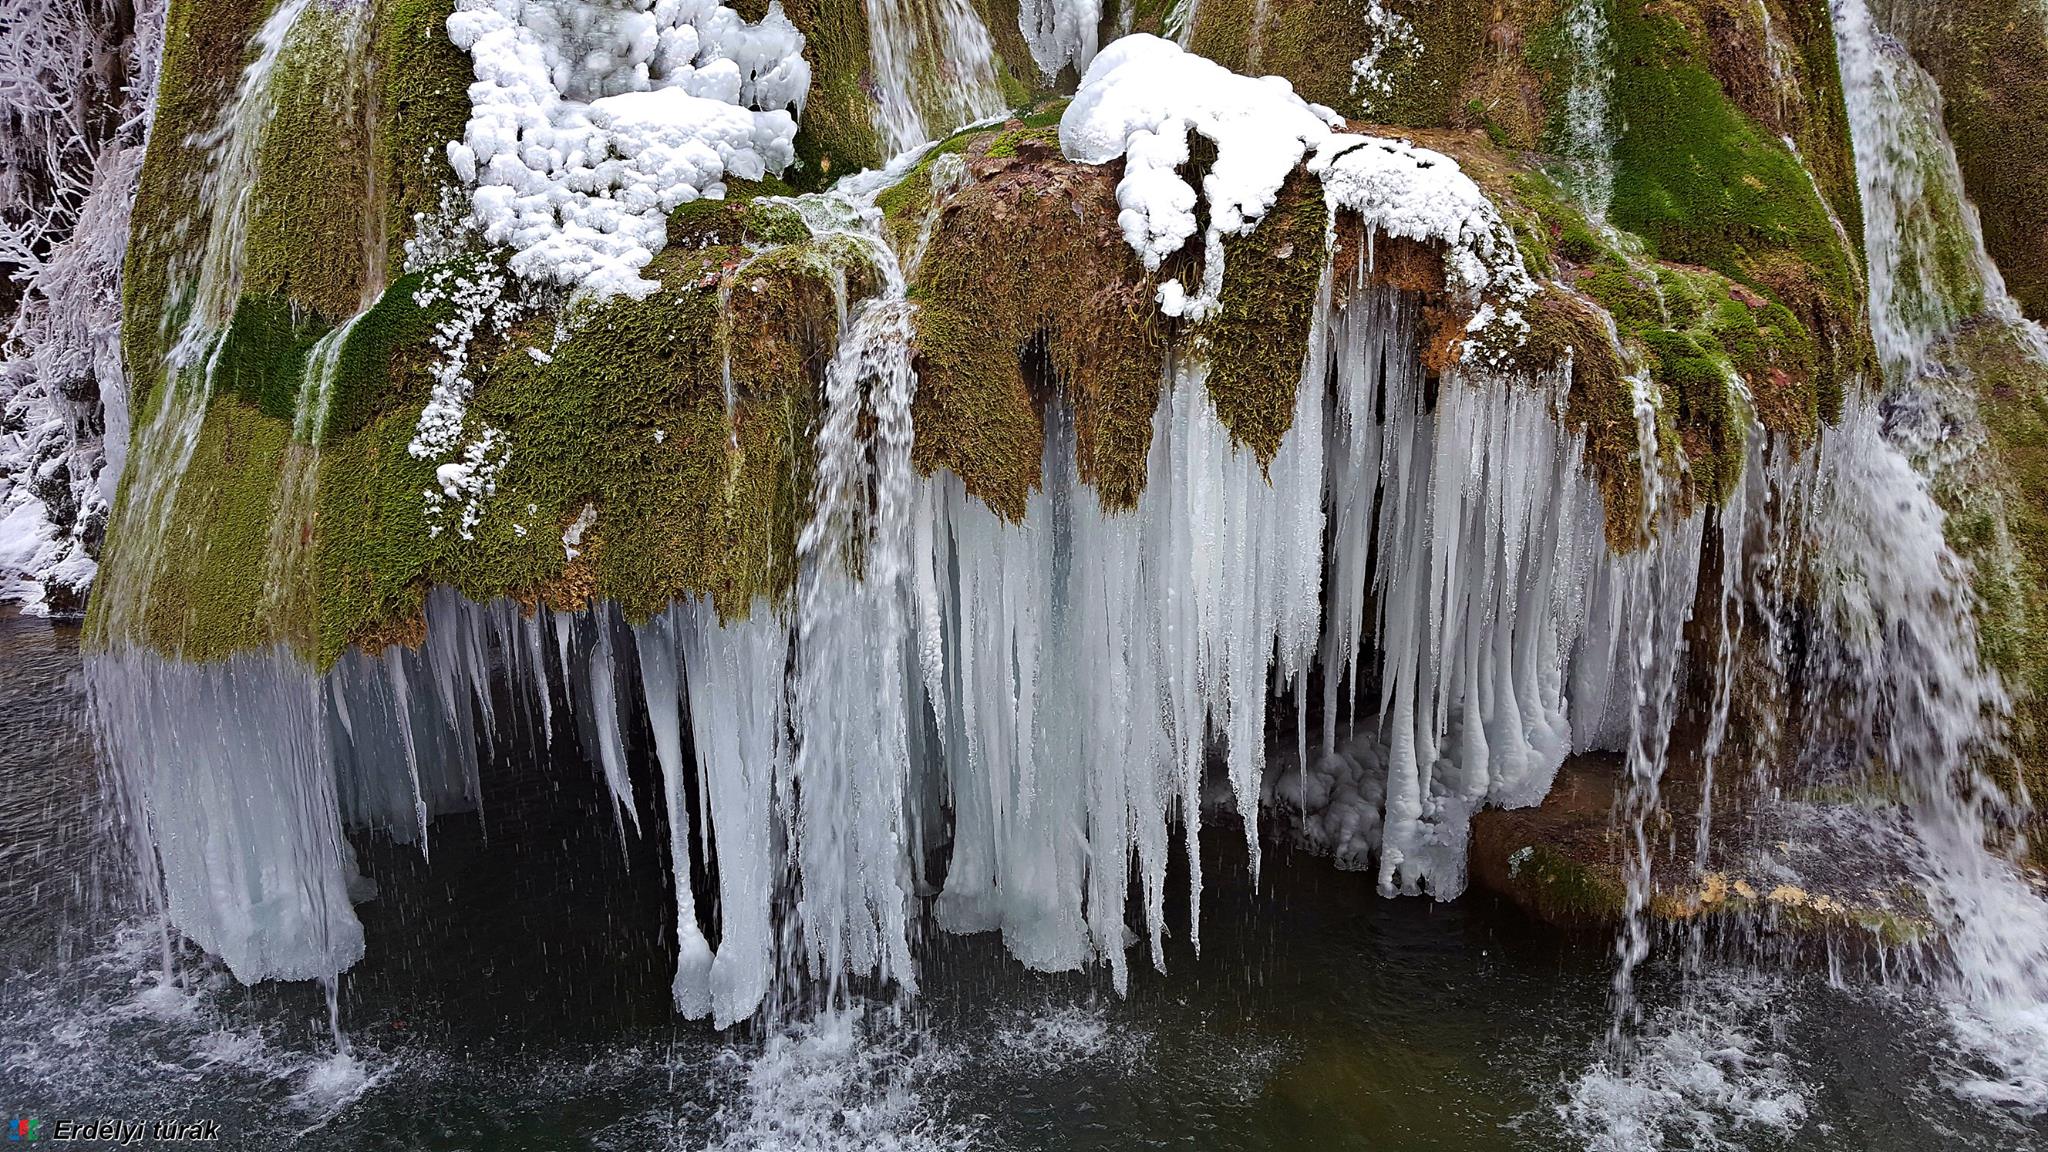 Кремасто неро водопад. Каскадный водопад Бигар, Румыния. Водопад Бигар Румыния зимой. Водопад Бигэр. 6. Каскадный водопад Бигар, Румыния.